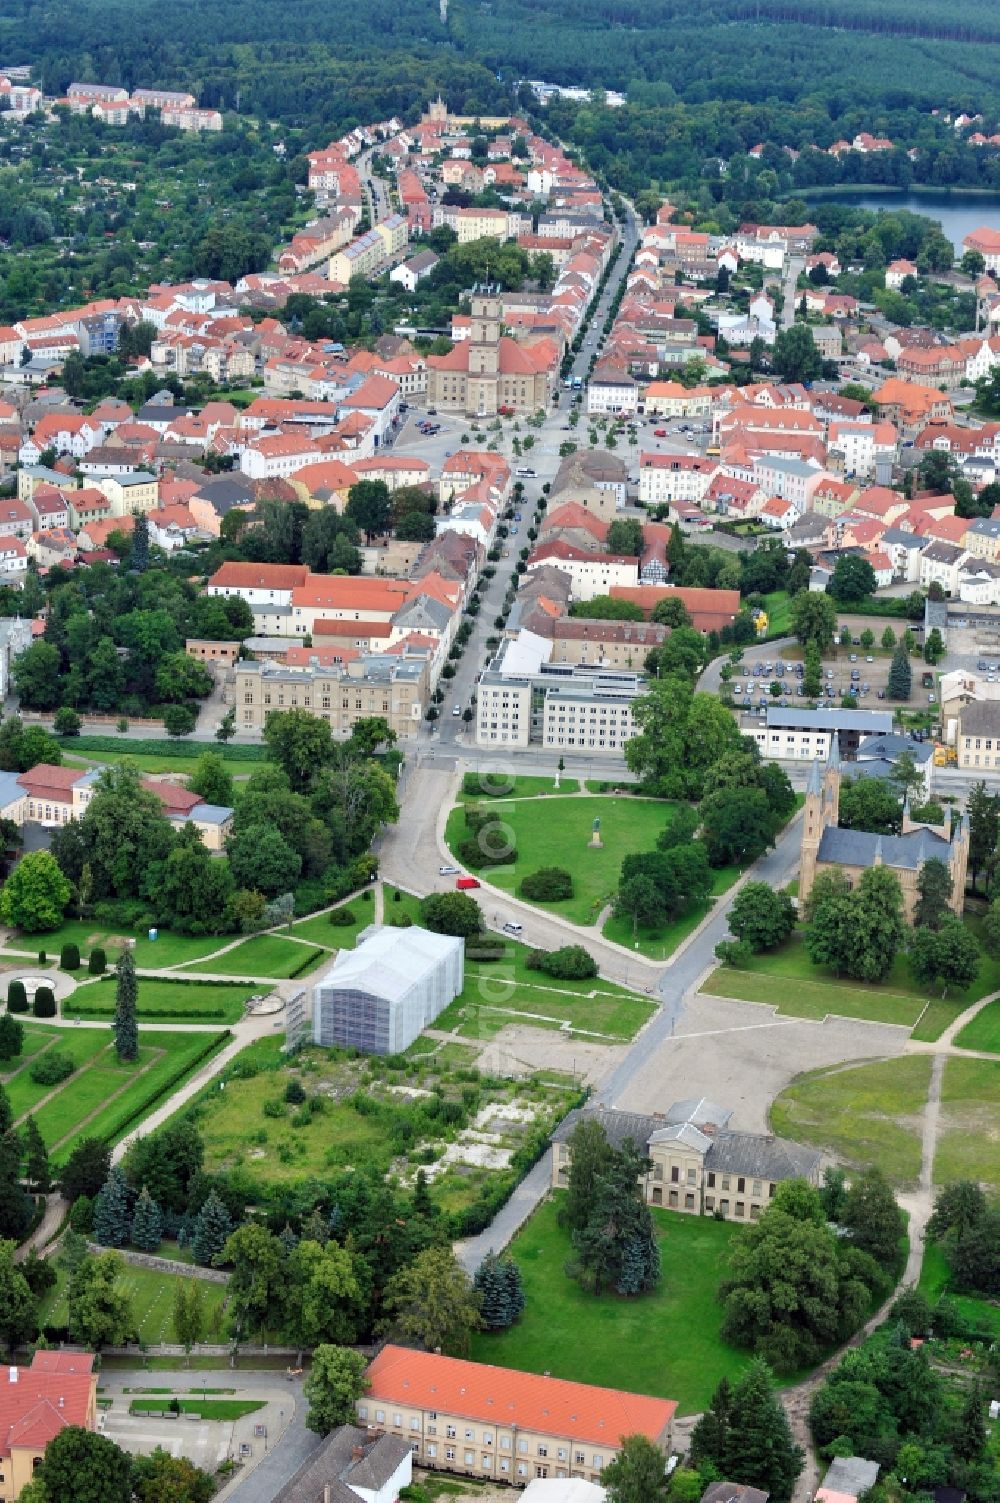 Neustrelitz from above - City view of Neustrelitz in Mecklenburg-Western Pomerania